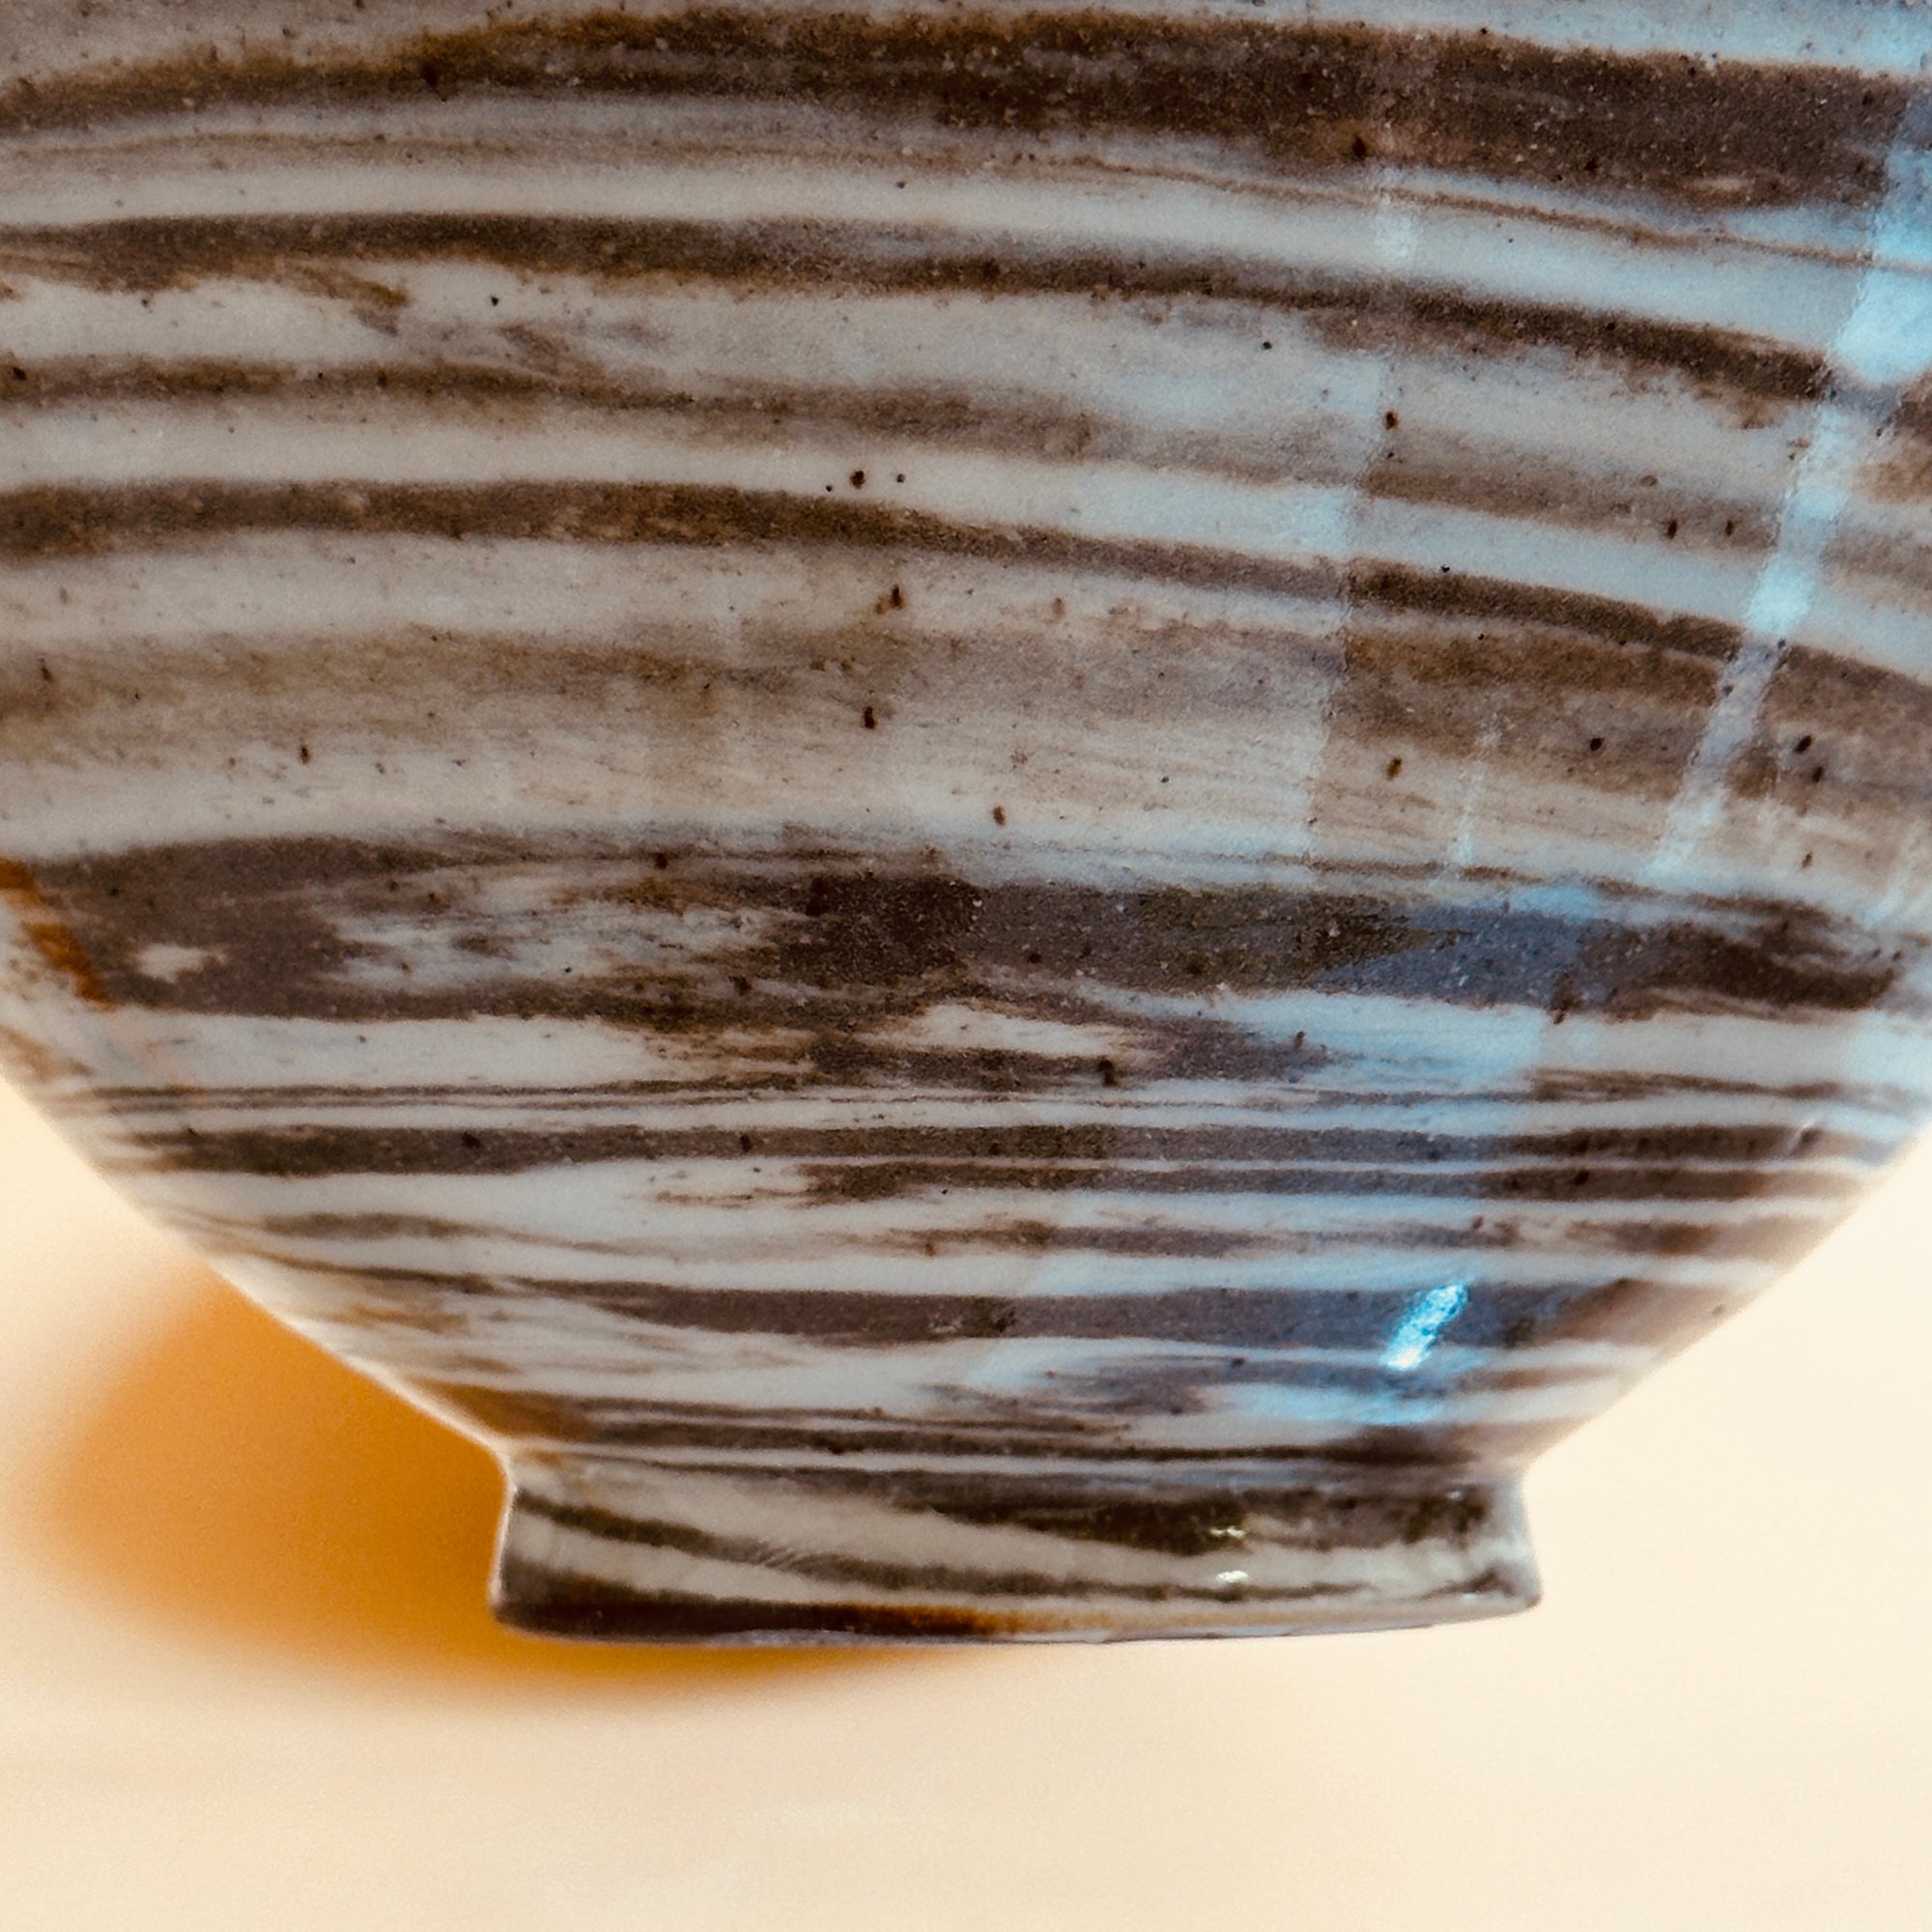 Marbled Ramen bowl